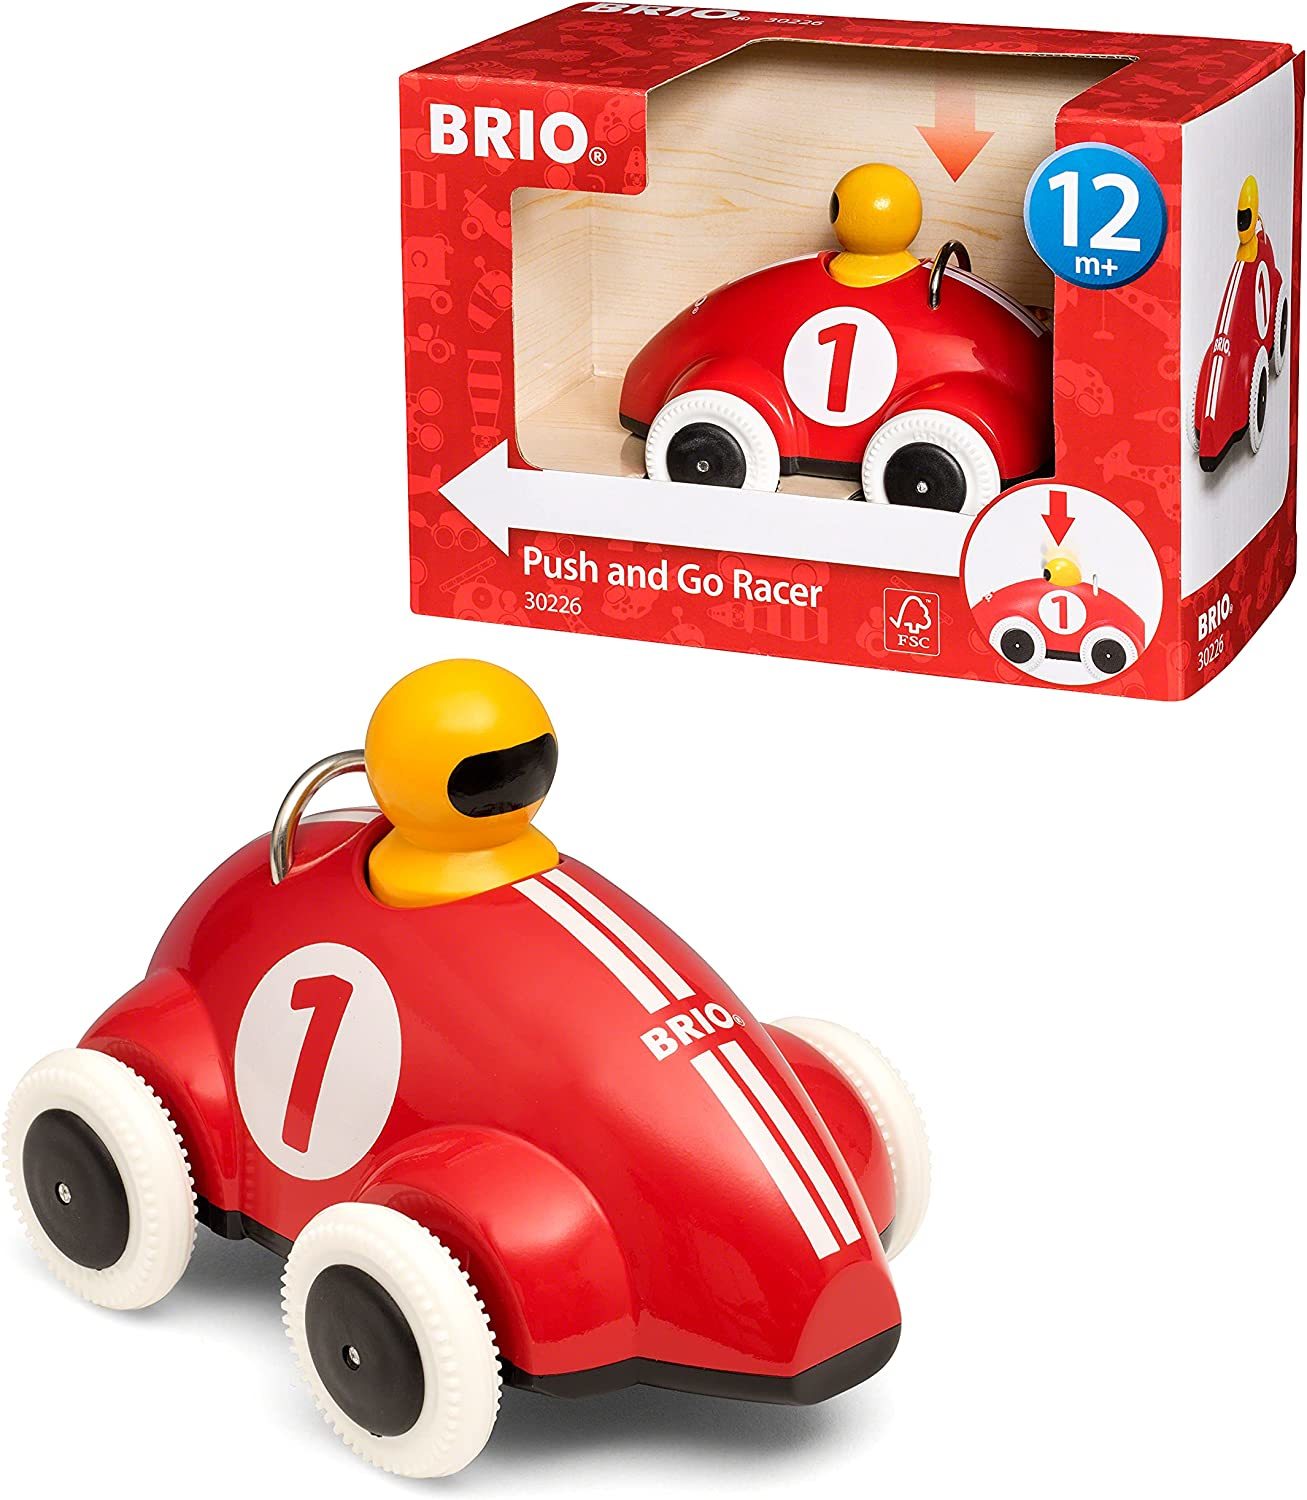 Brio World Push and Go Racer 30226